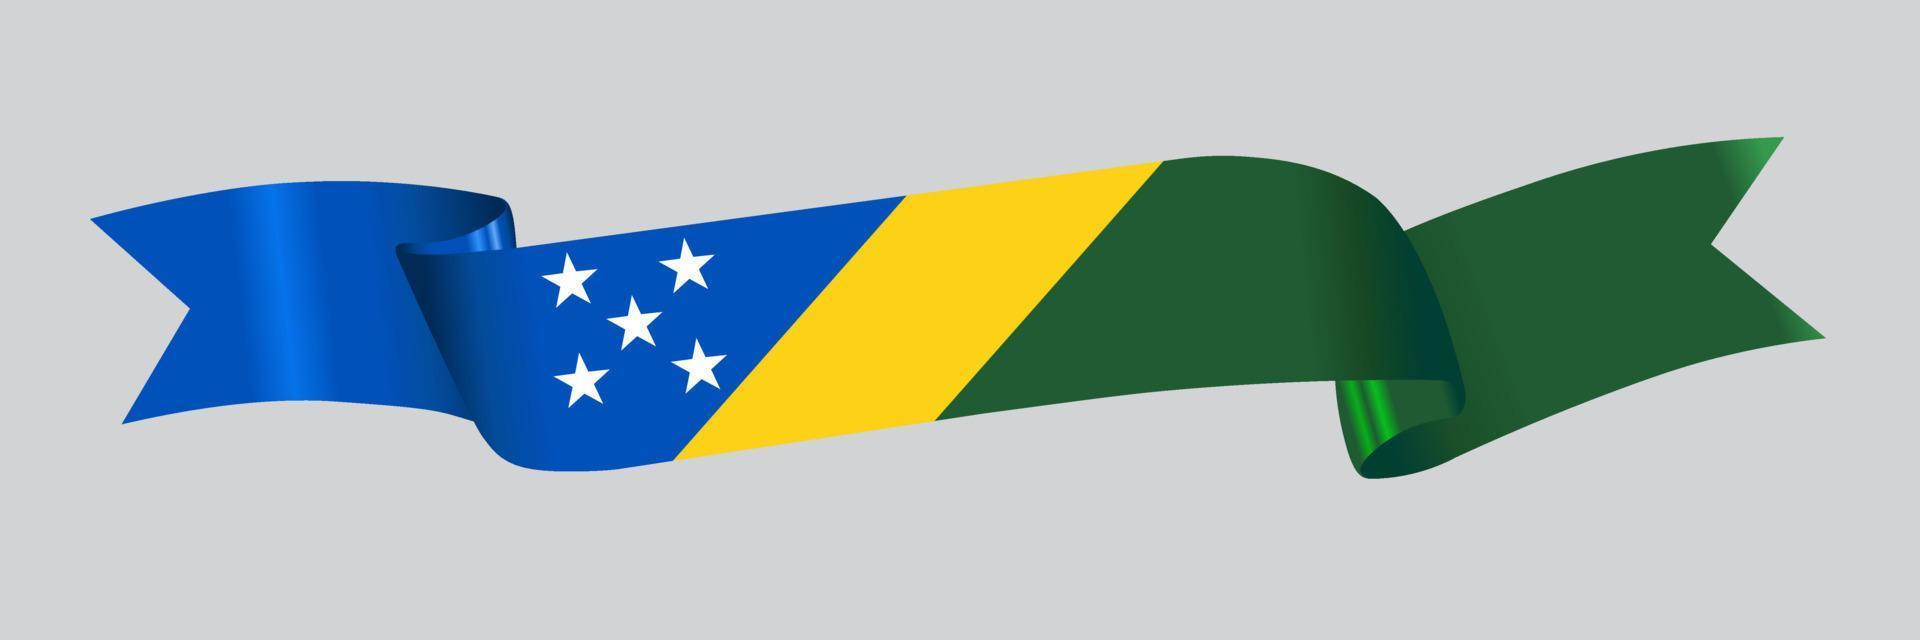 3d flagga av solomon öar på band. vektor